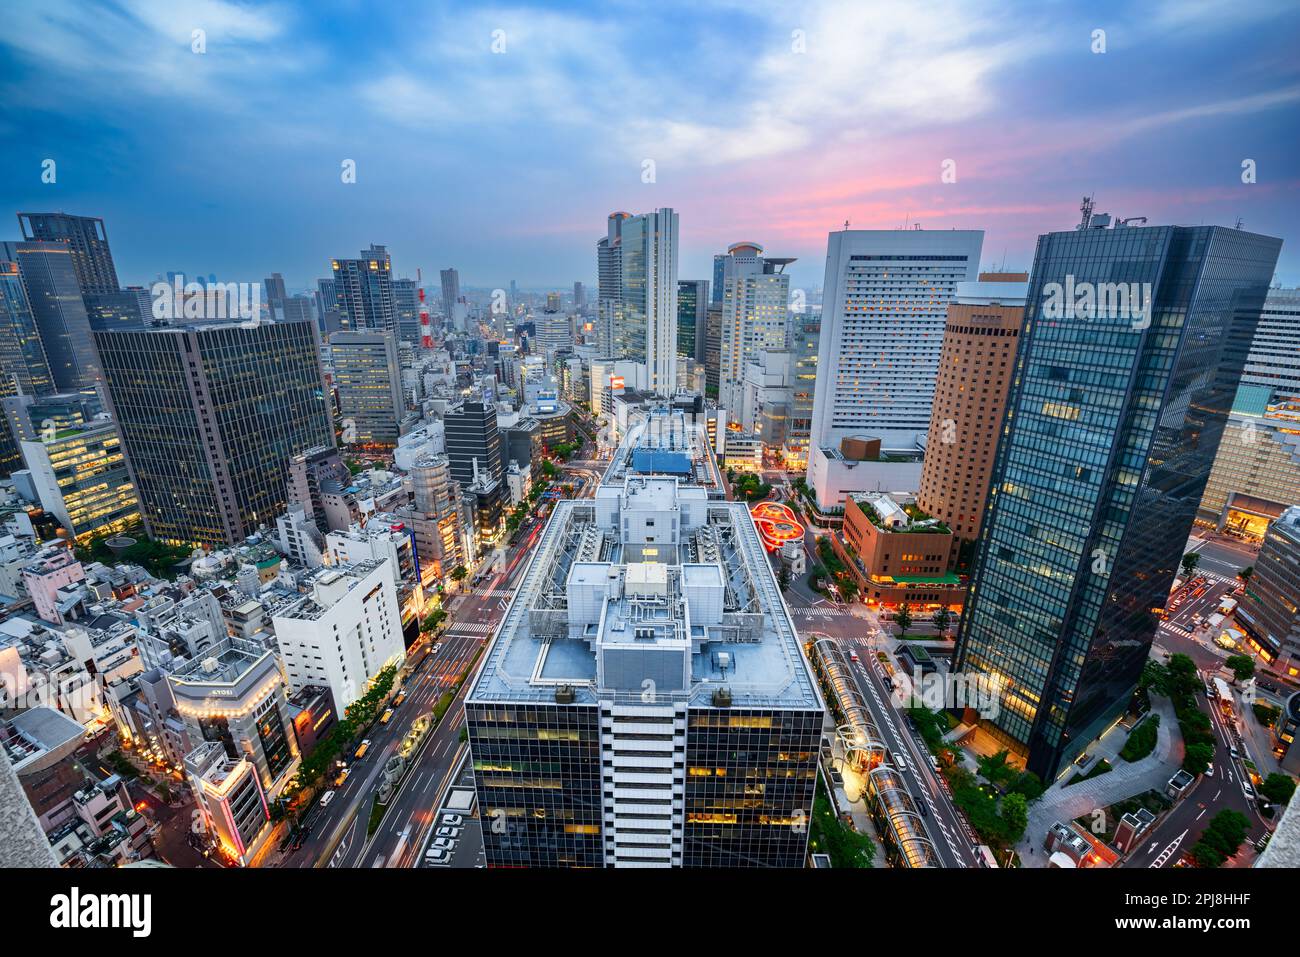 Osaka, Japan cityscape overlooking the Umeda District. Stock Photo